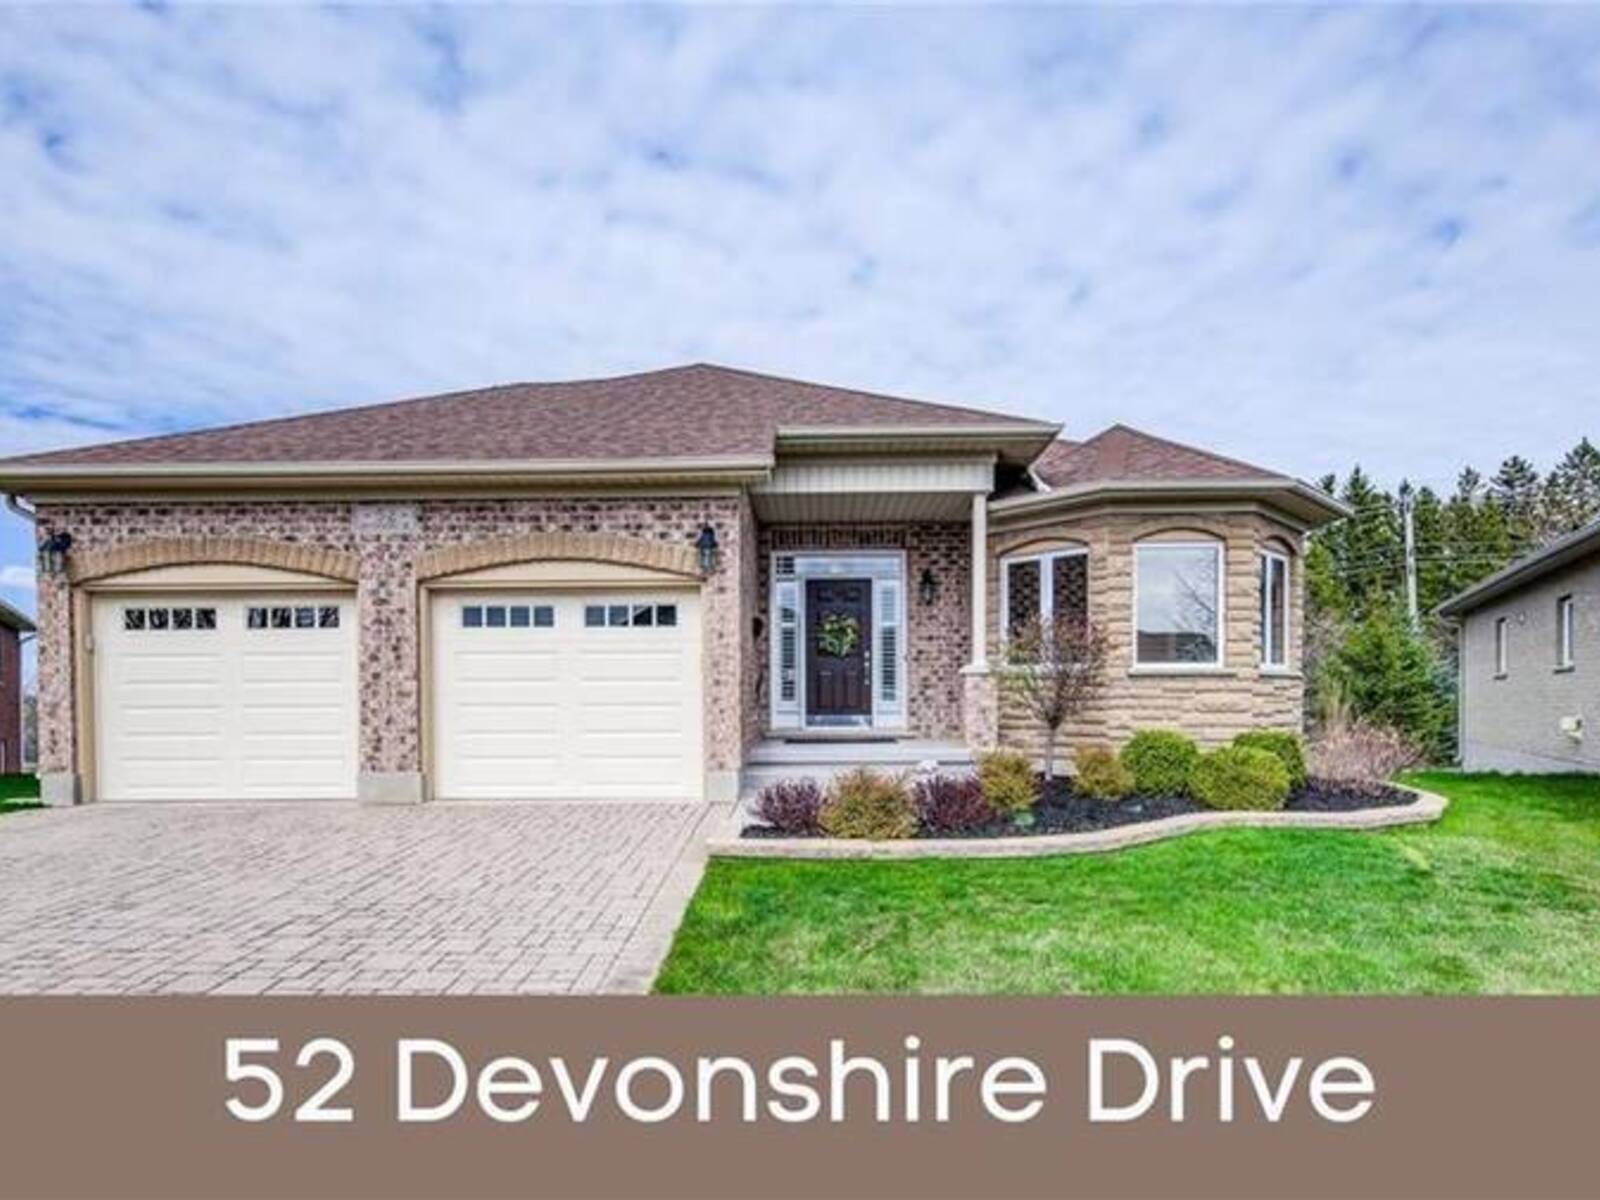 52 DEVONSHIRE Drive, New Hamburg, Ontario N3A 4J7